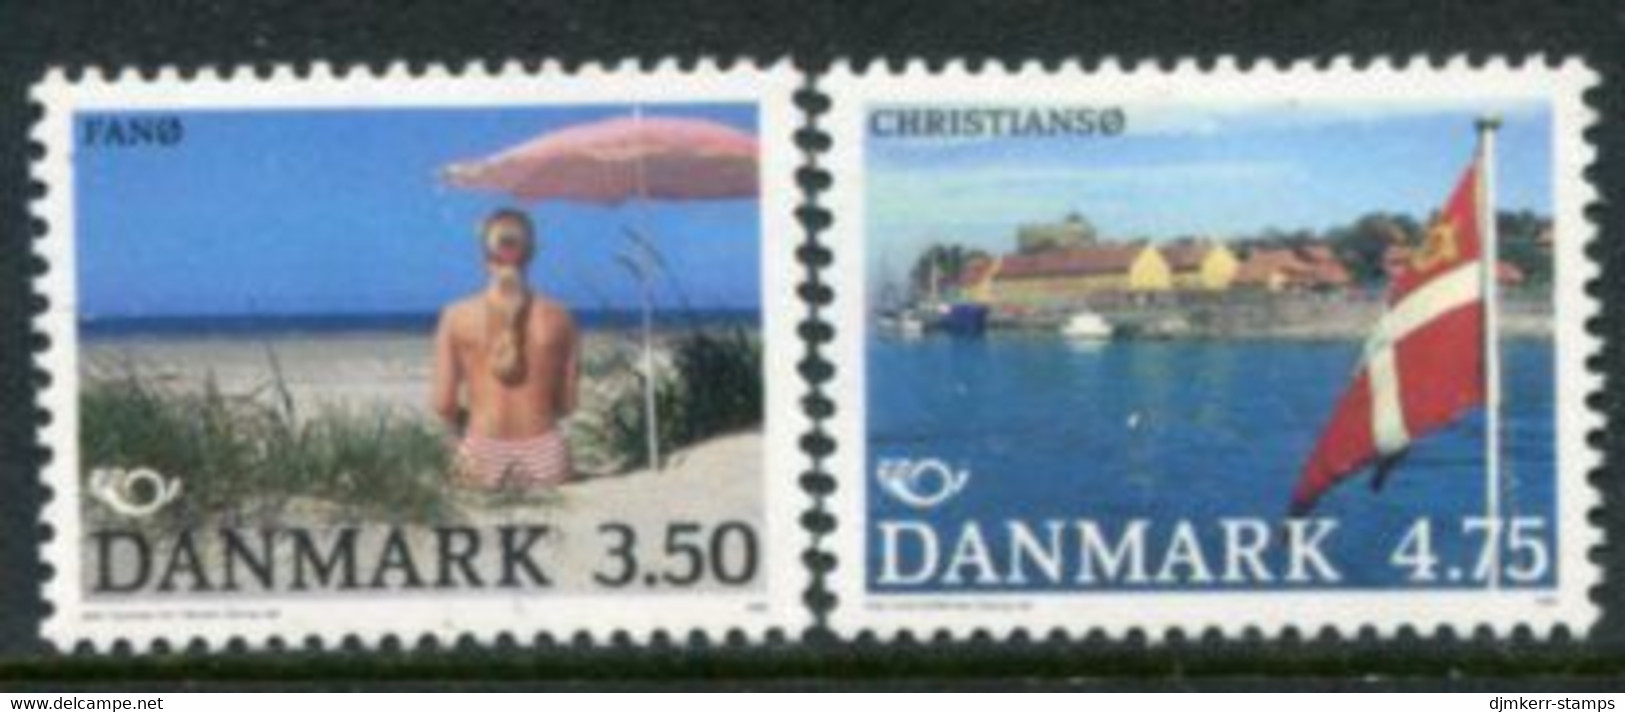 DENMARK 1991 Tourism  MNH / **.   Michel 1003-04 - Nuevos